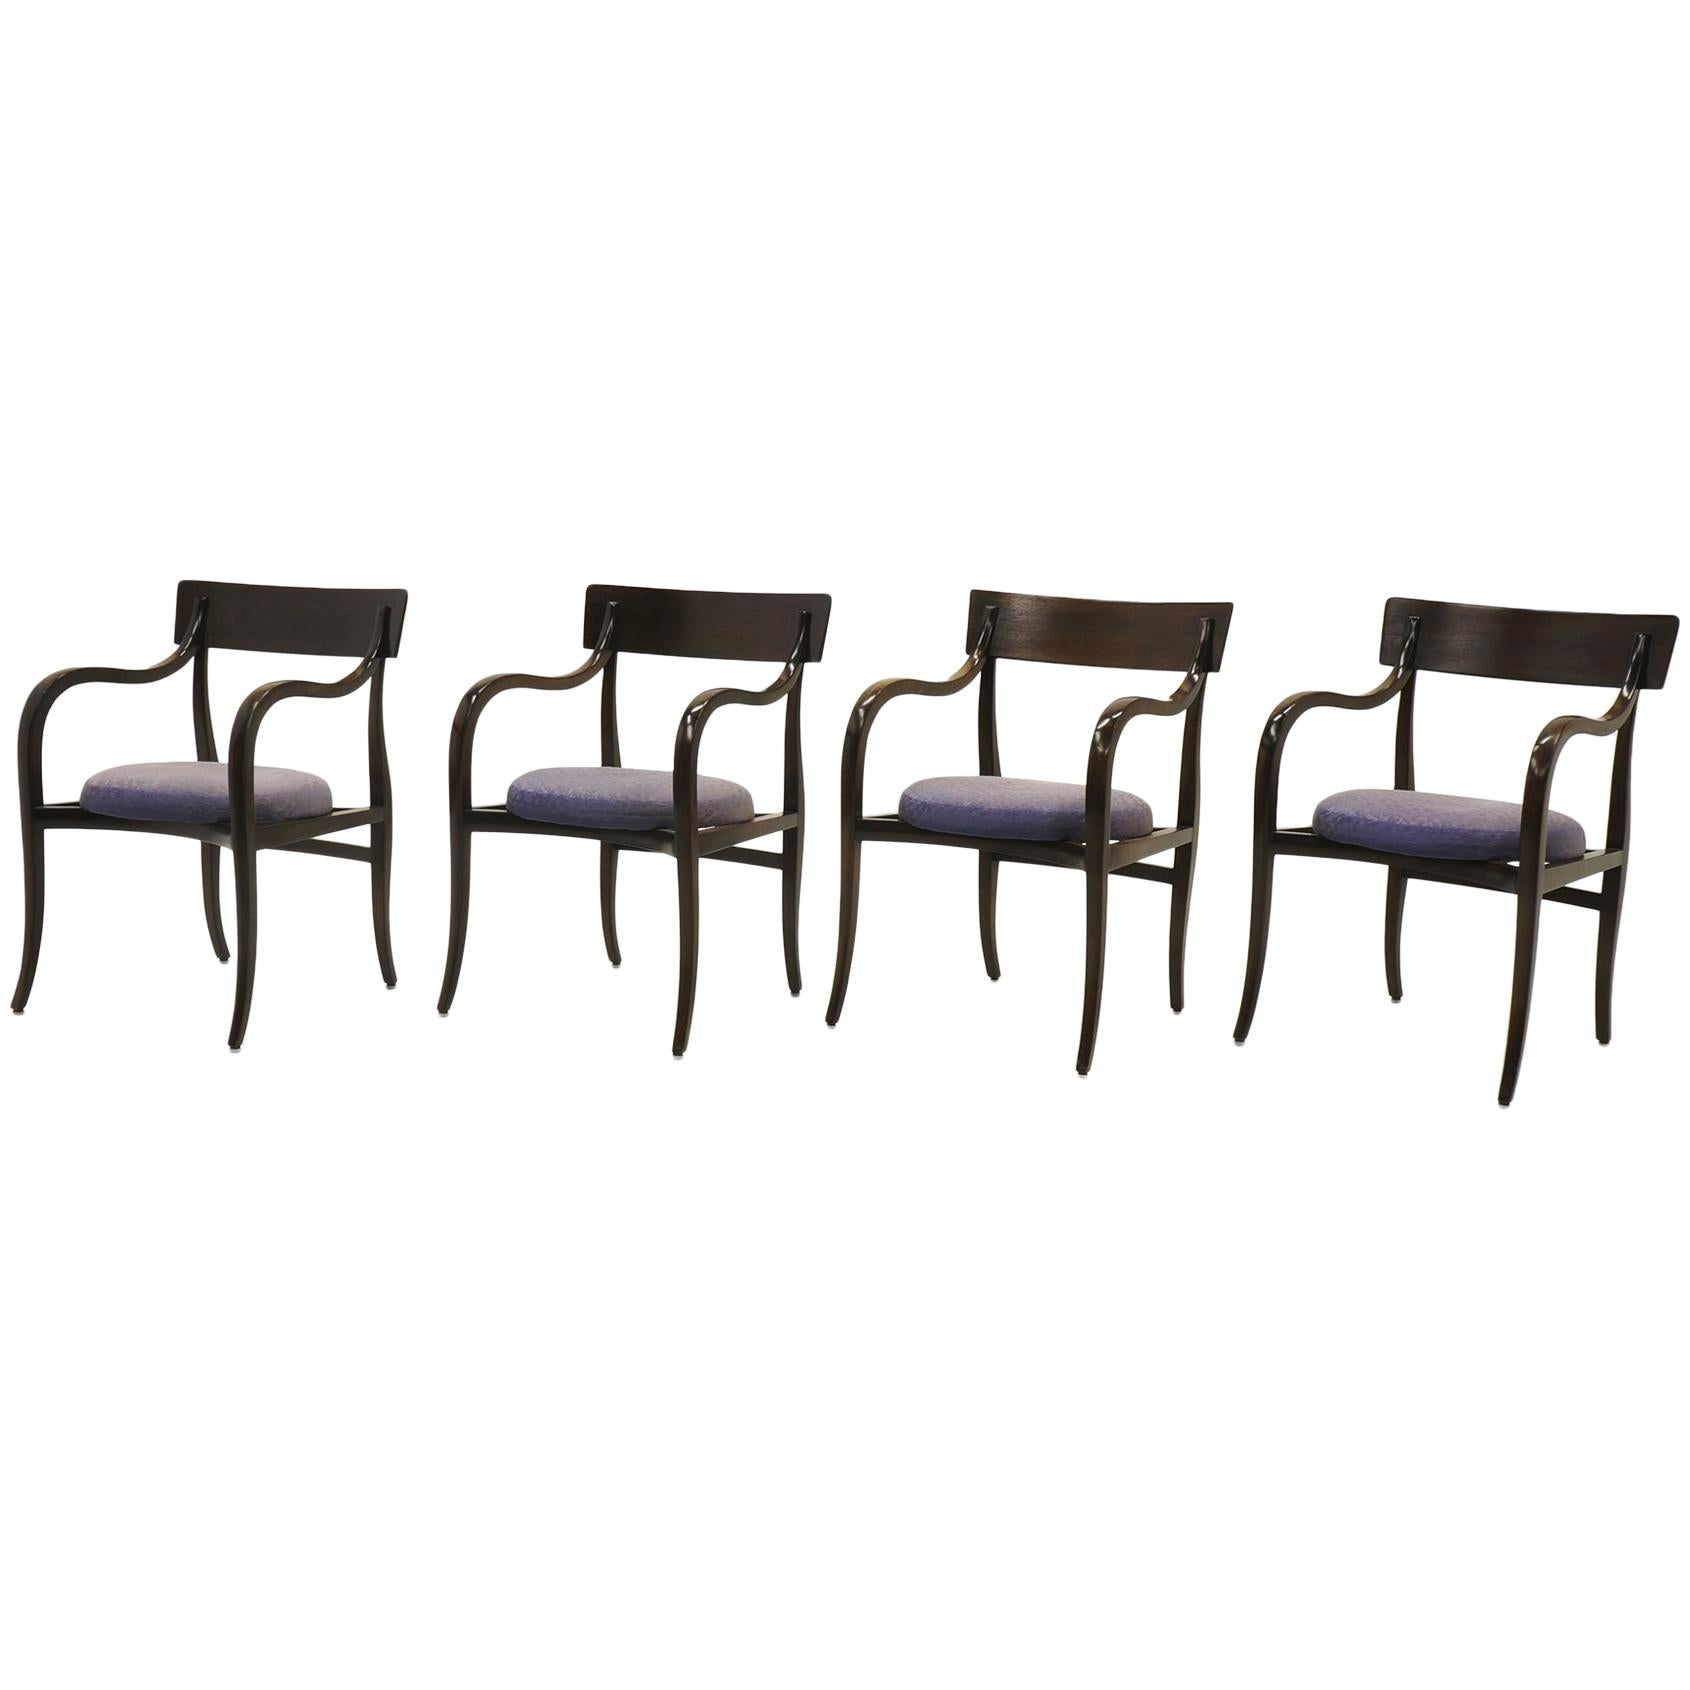 Four Alexandria Chairs by Edward Wormley for Dunbar, Elegant Modern at Its Best